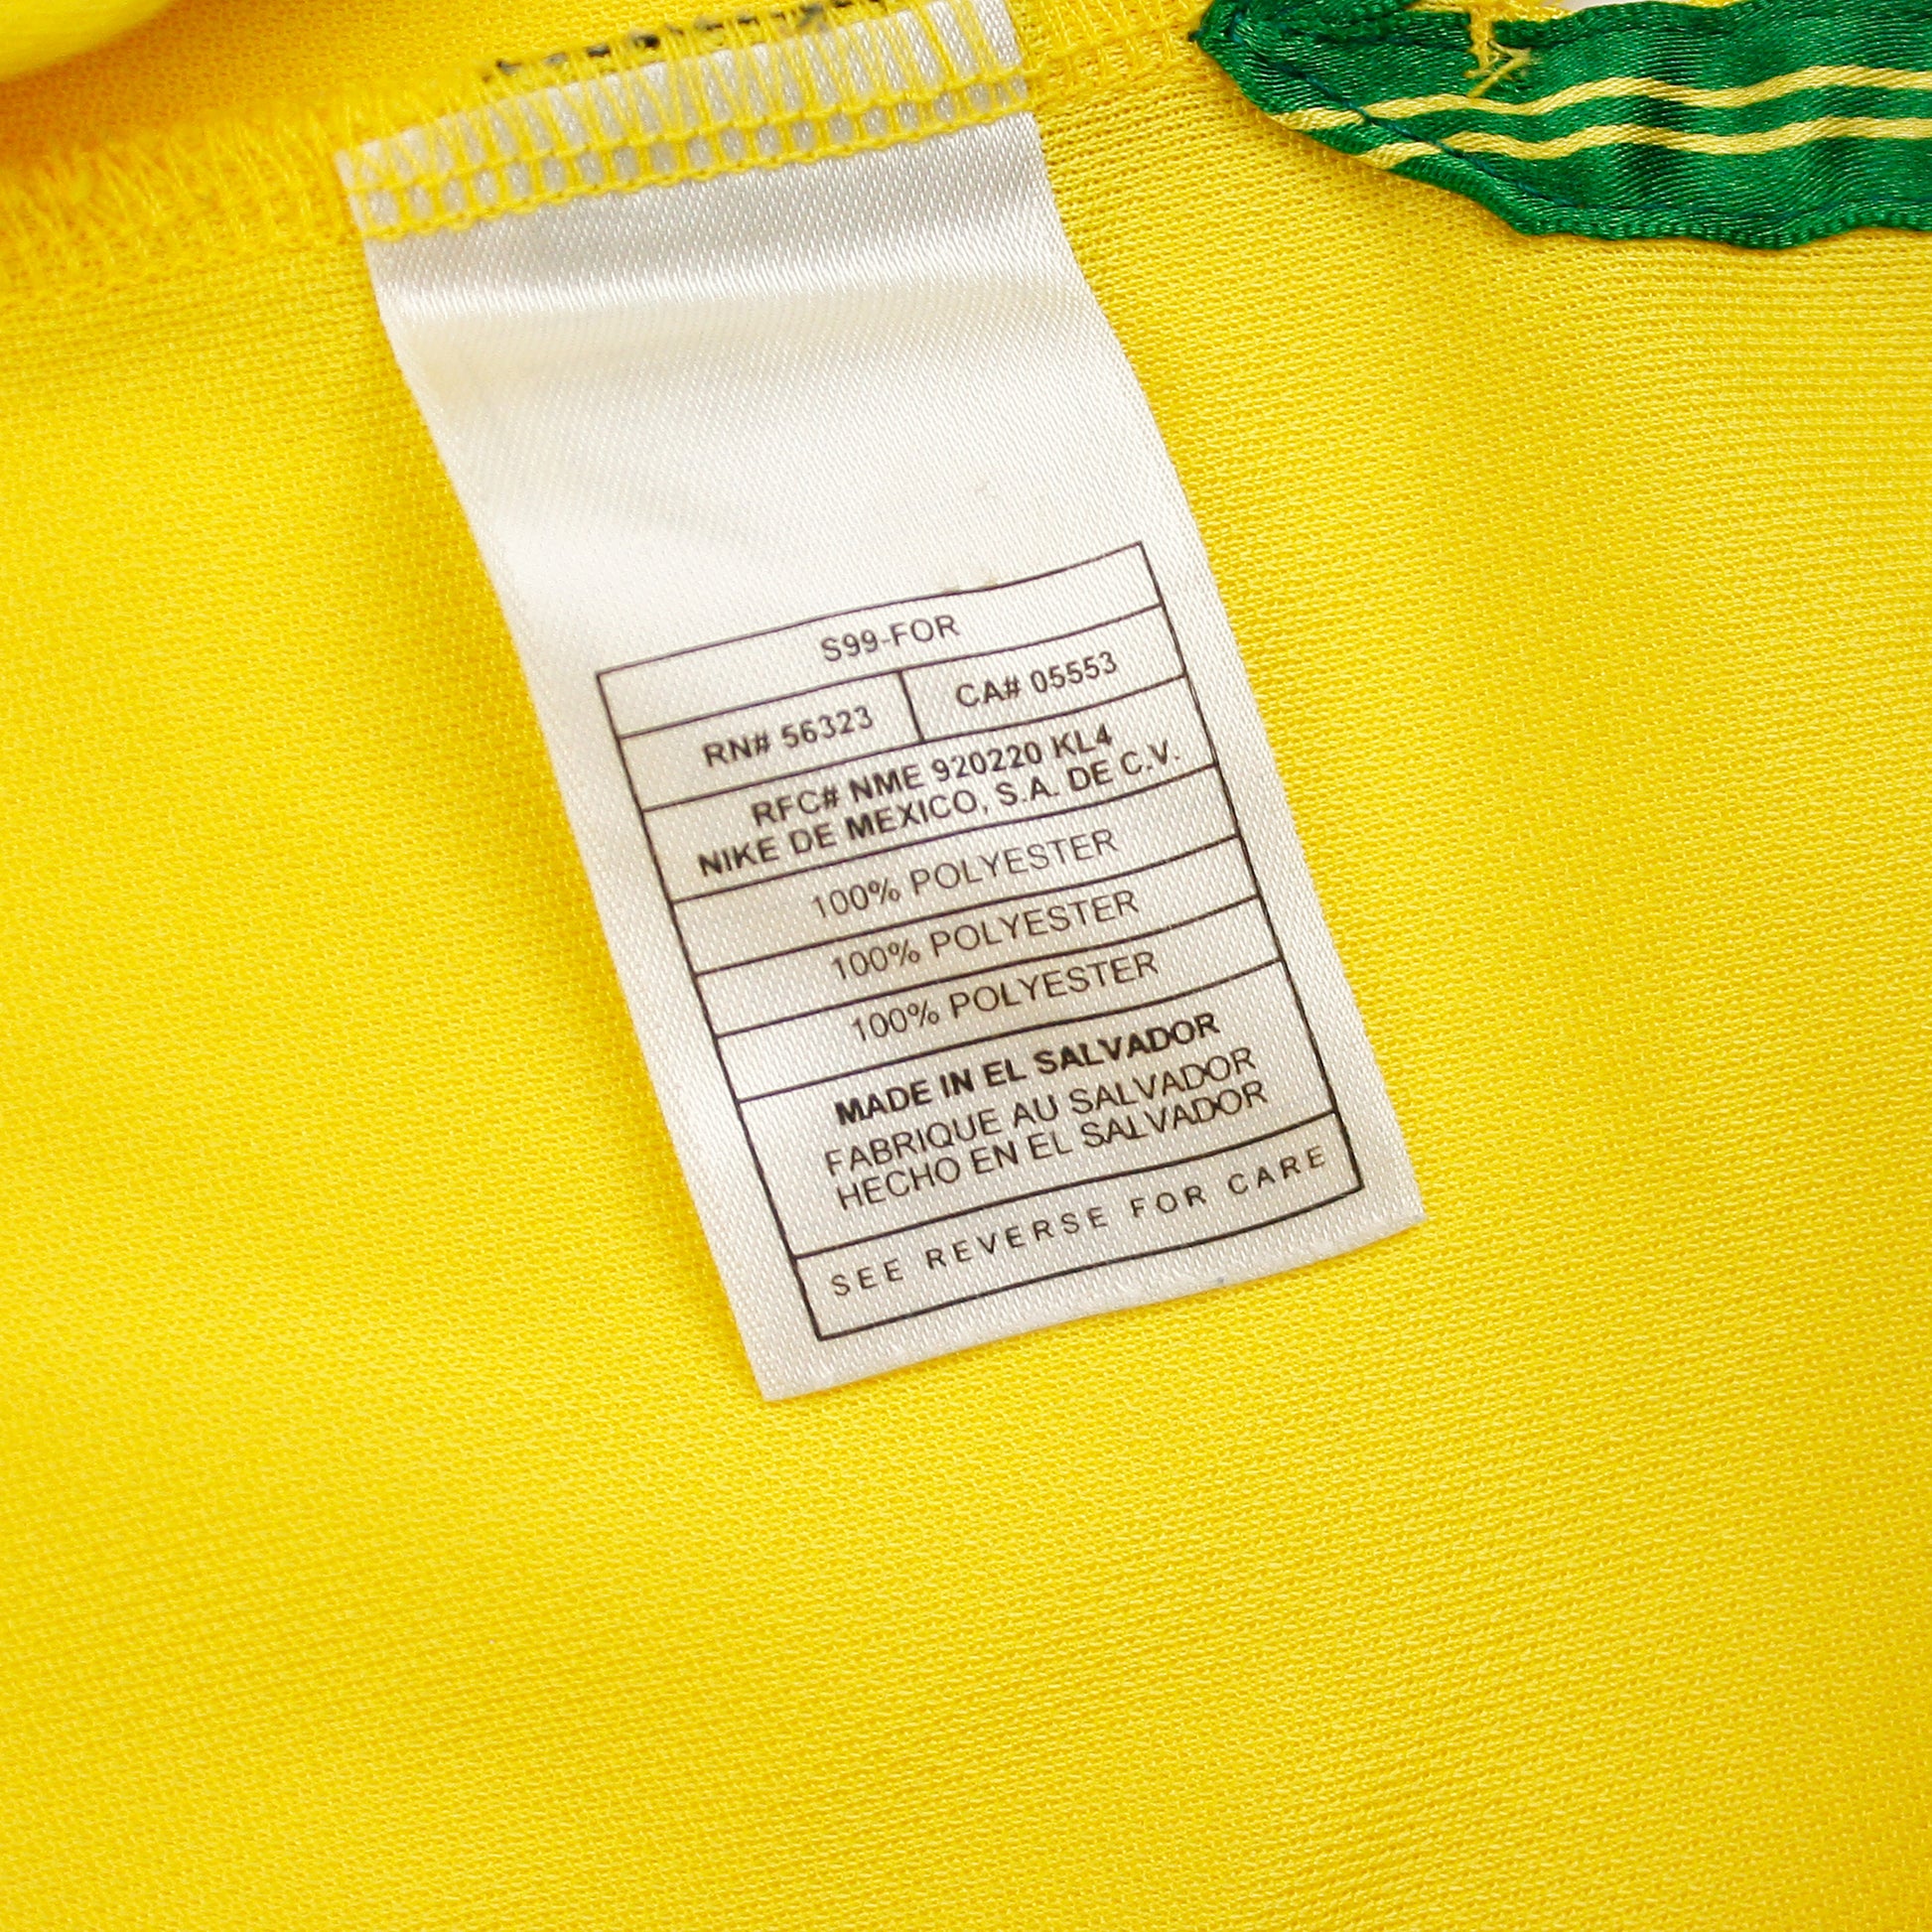 Greatest Kits - 🚨NEW IN🚨 1998/00 Brazil training jacket